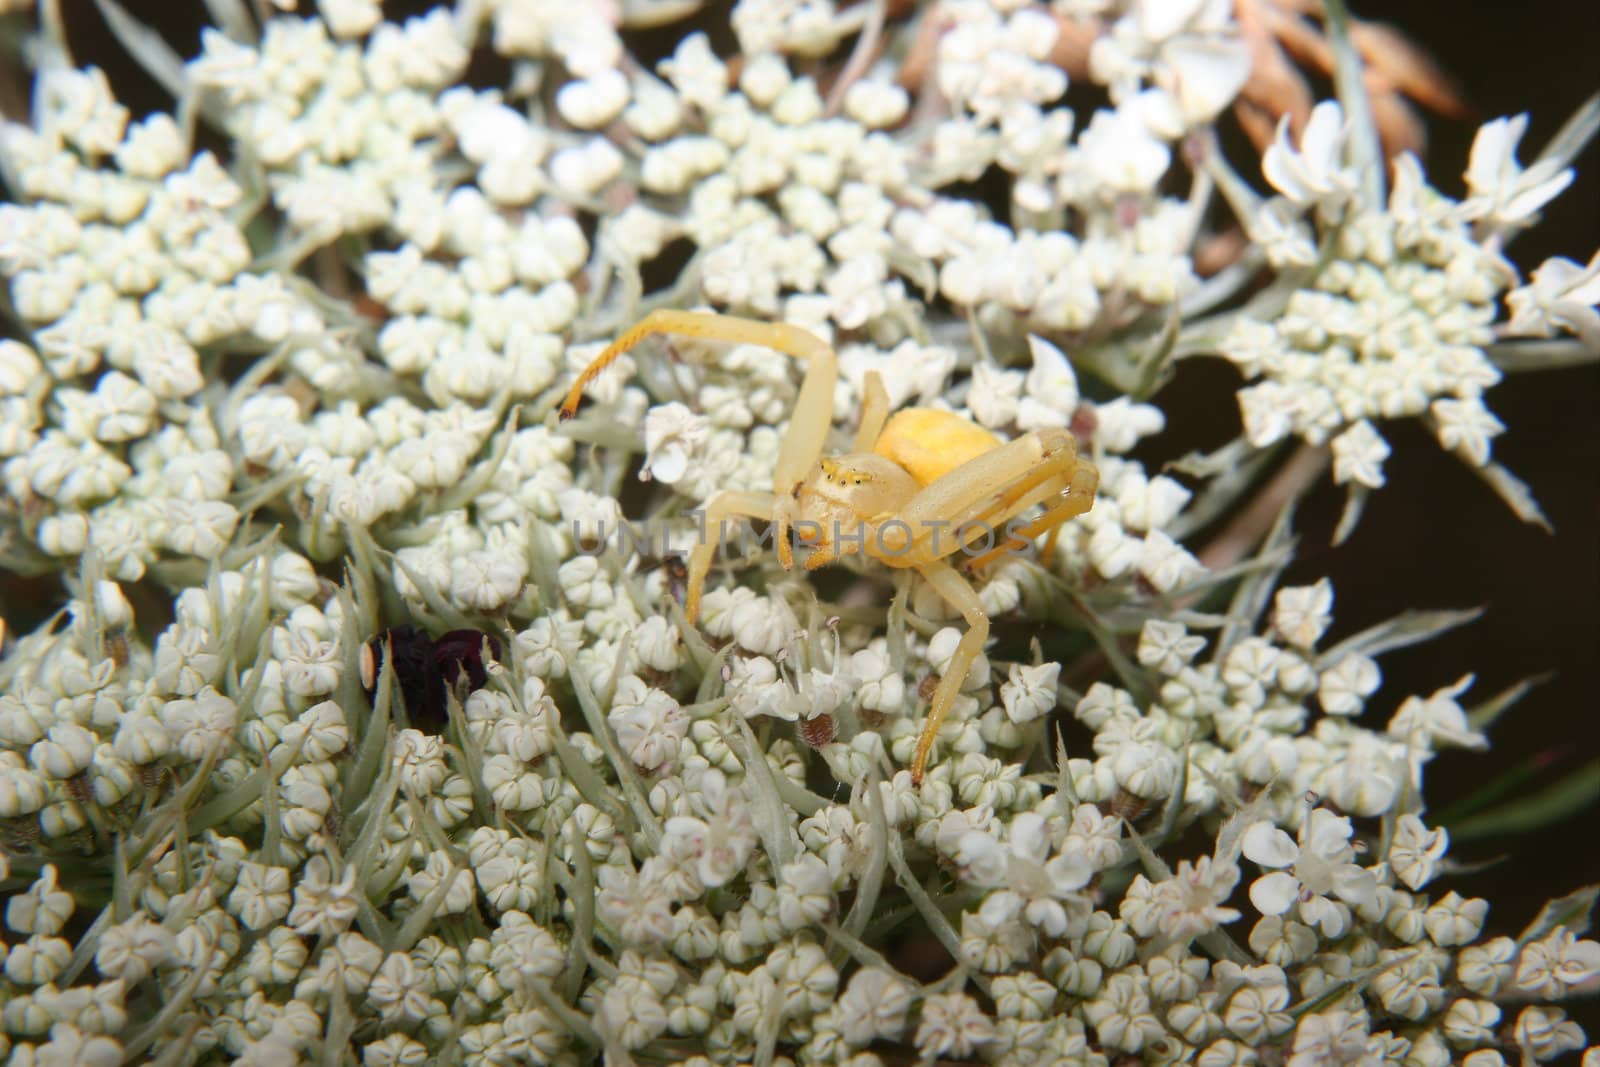 Goldenrod crab spider (Misumena vatia) - Female on a flower